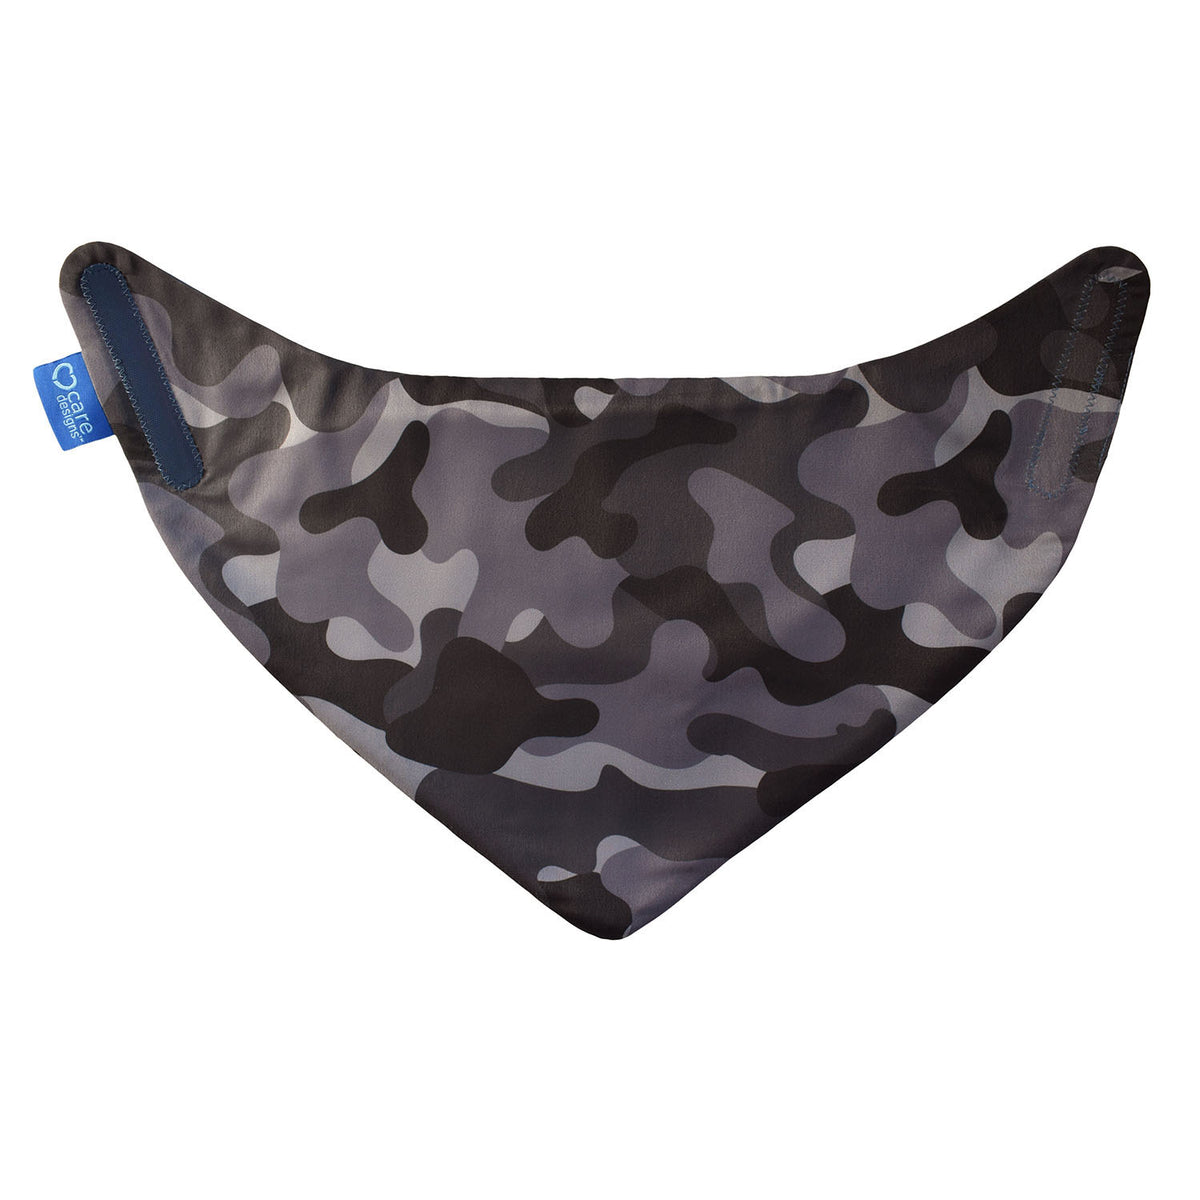 Junior Neckerchief style dribble bib - Black Camouflage